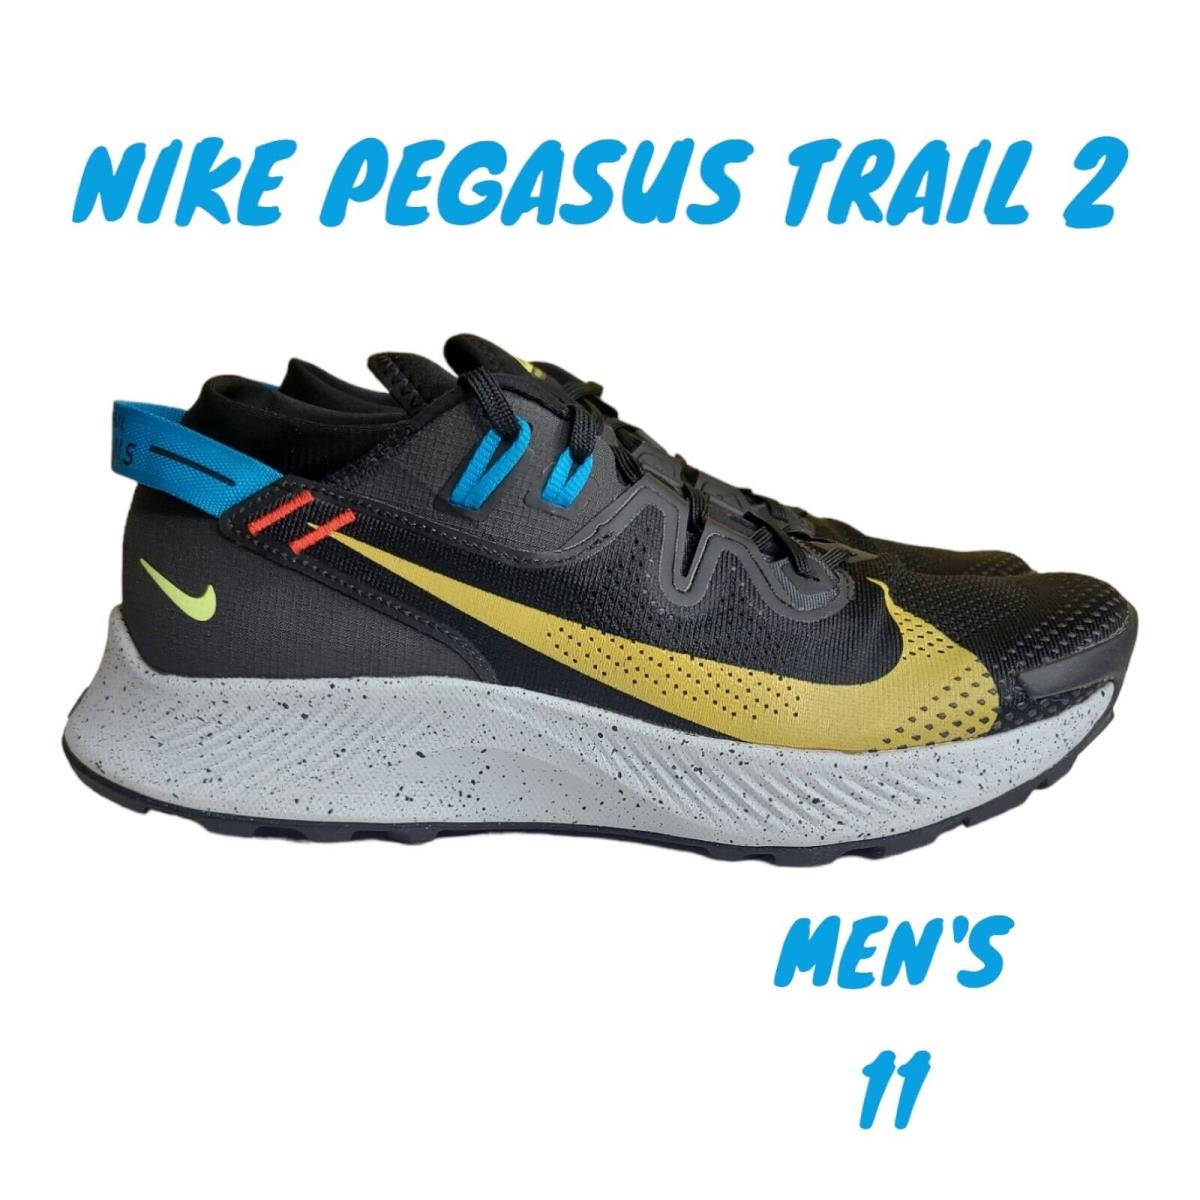 Nike Pegasus Trail 2 Shoes Men`s Size 11 Black Gold Running Sneakers CK4305 001